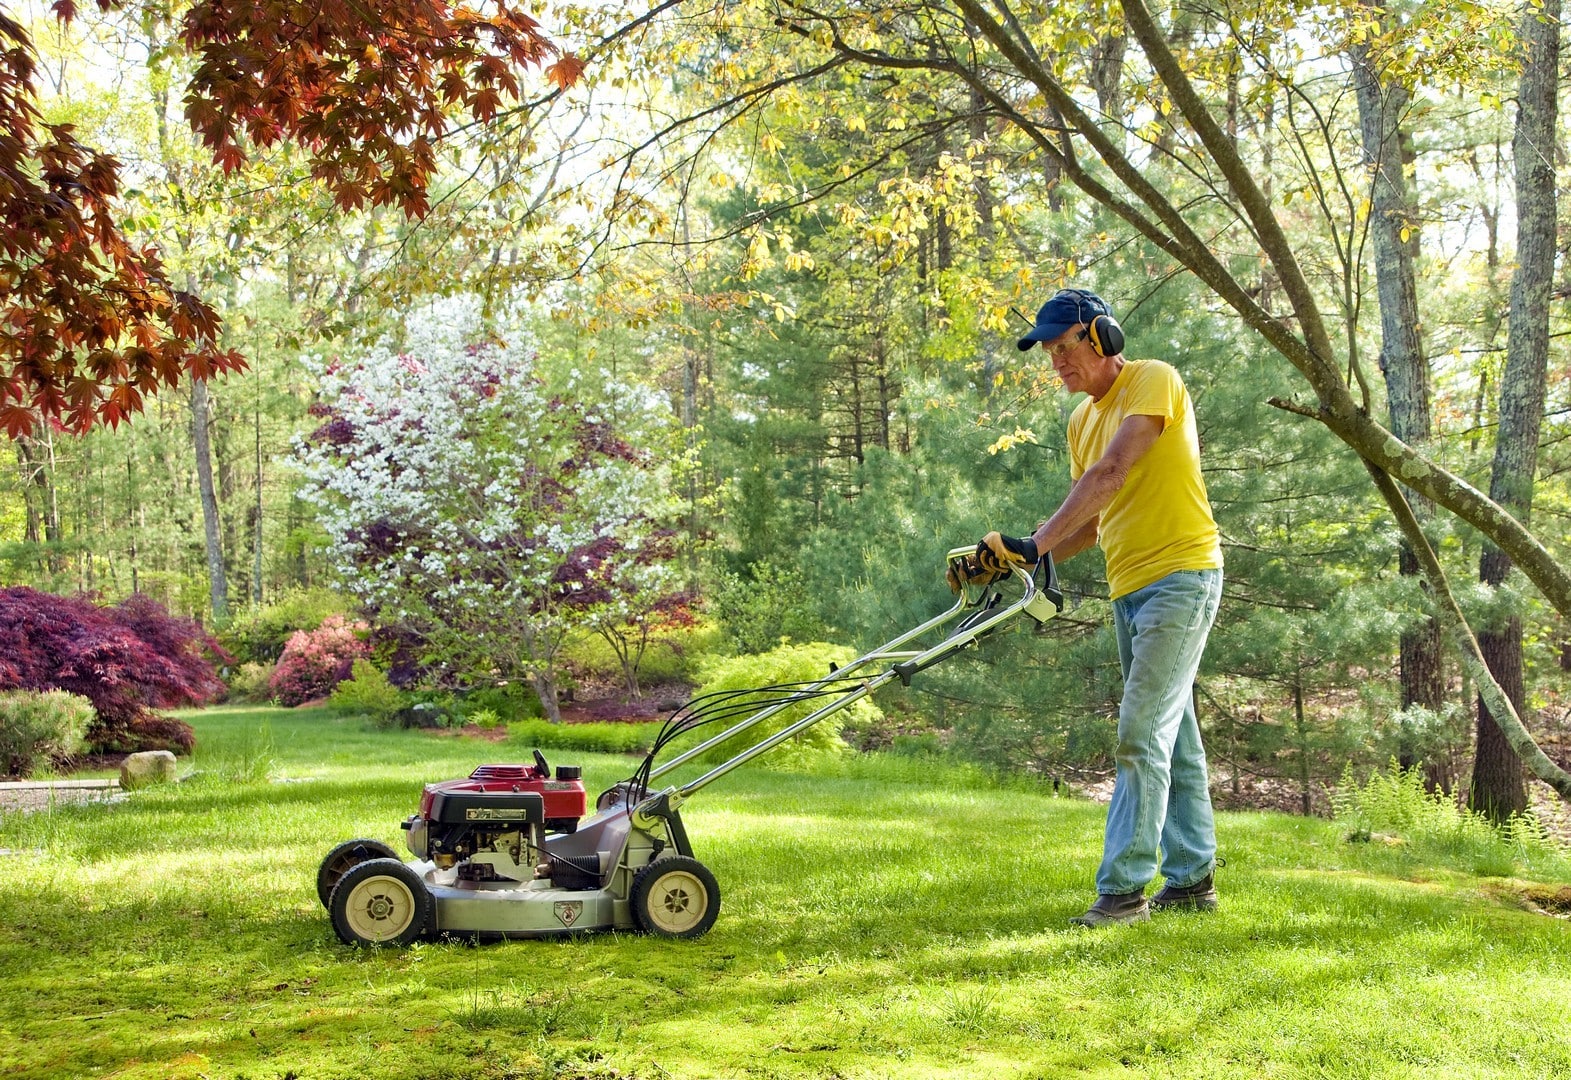 Lawnmowers and garden equipment